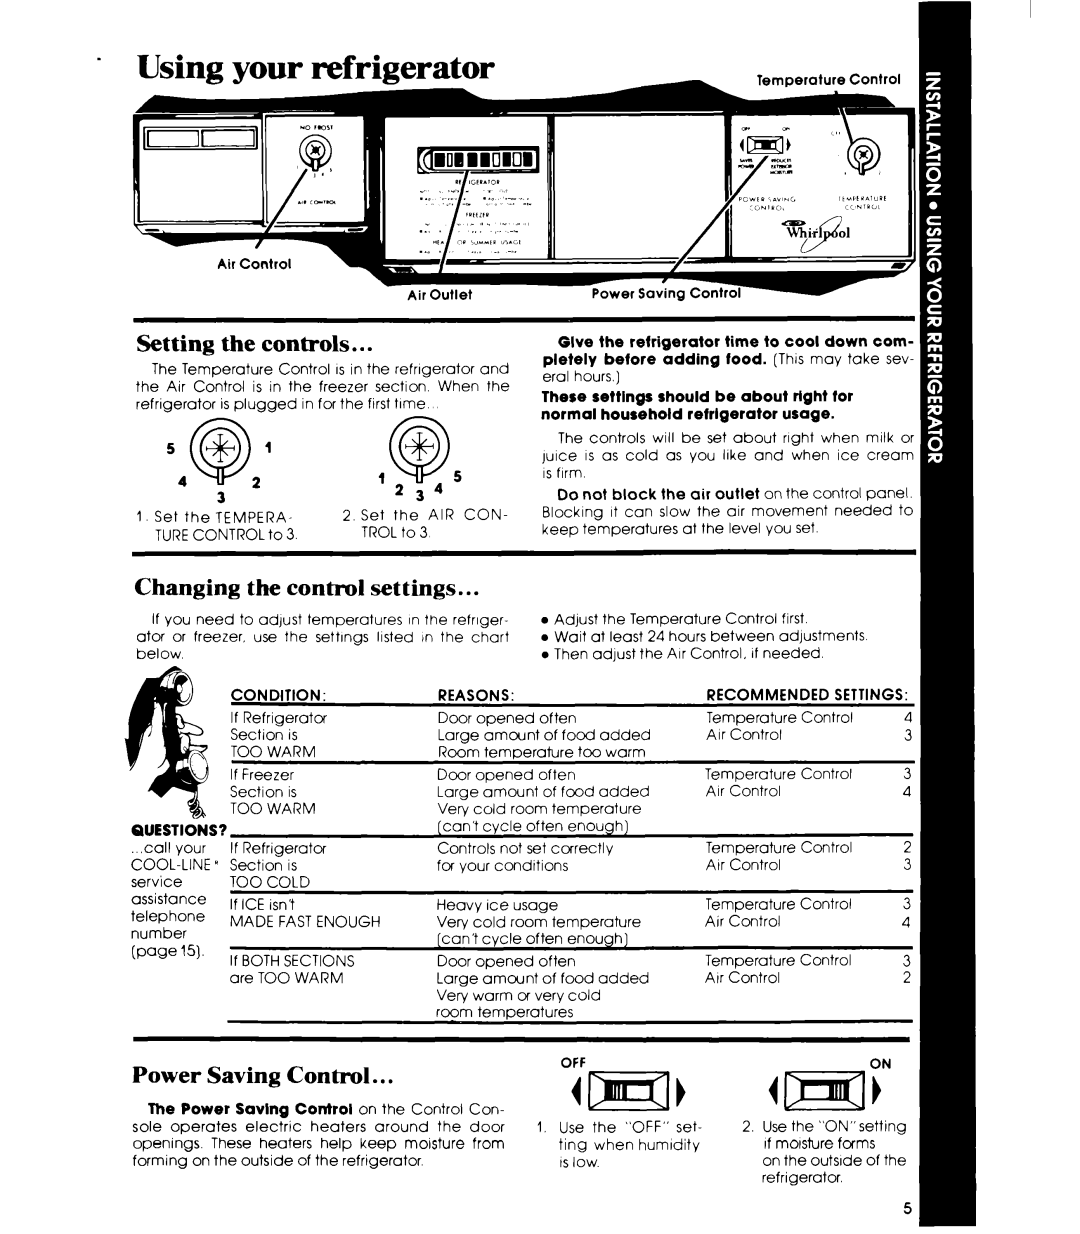 Whirlpool ED19HK manual Setting the controls, Changing the control settings, Power Saving Control, 54@,’, Questions? 